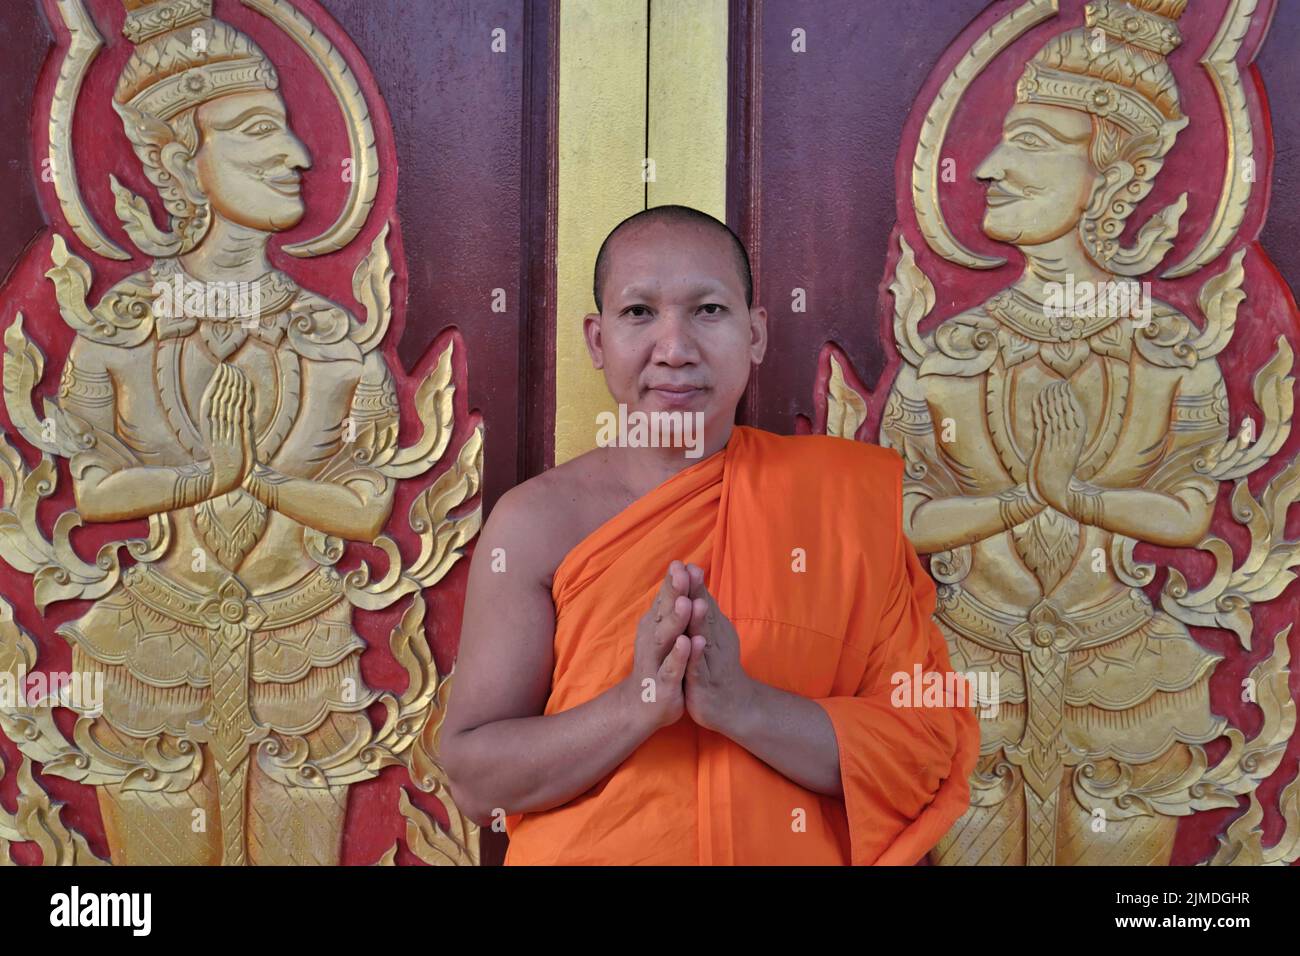 A Buddhist monk at Wat Mongkon (Mongkol) Nimit in Phuket Town, Phuket, Thailand, greeting the visitor with a wai, the traditional Thai greeting Stock Photo